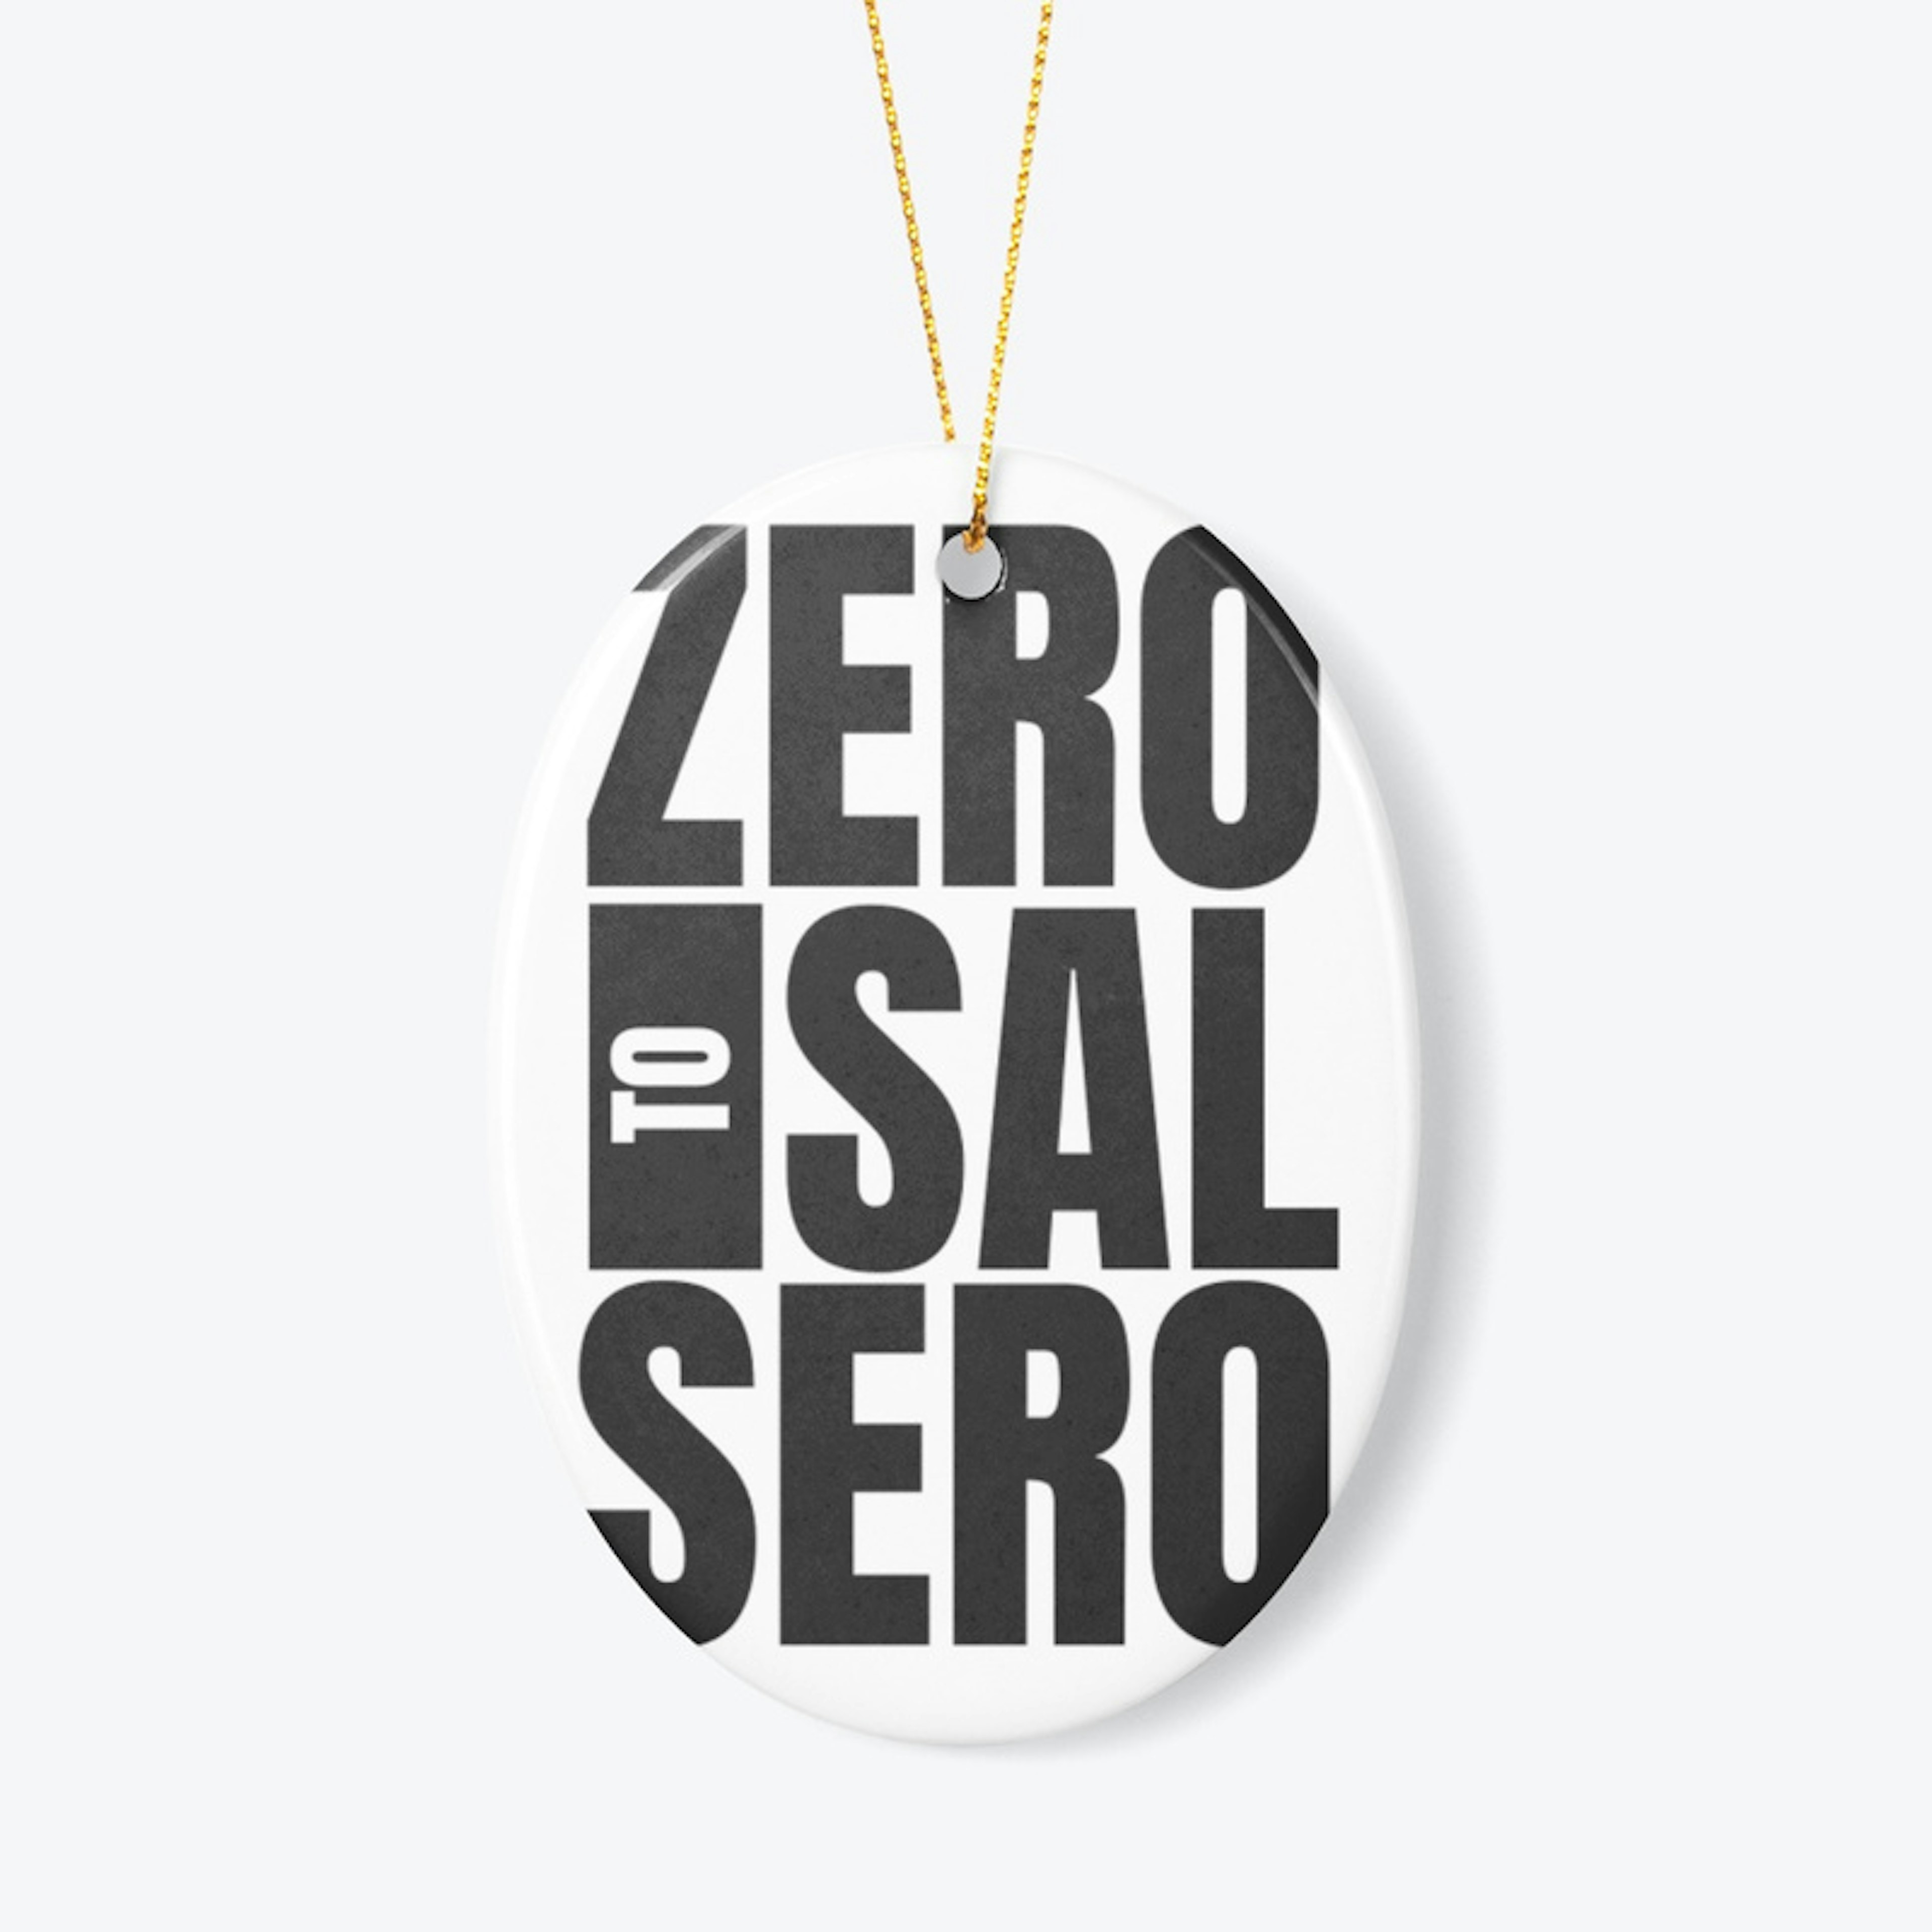 Zero to Salsero